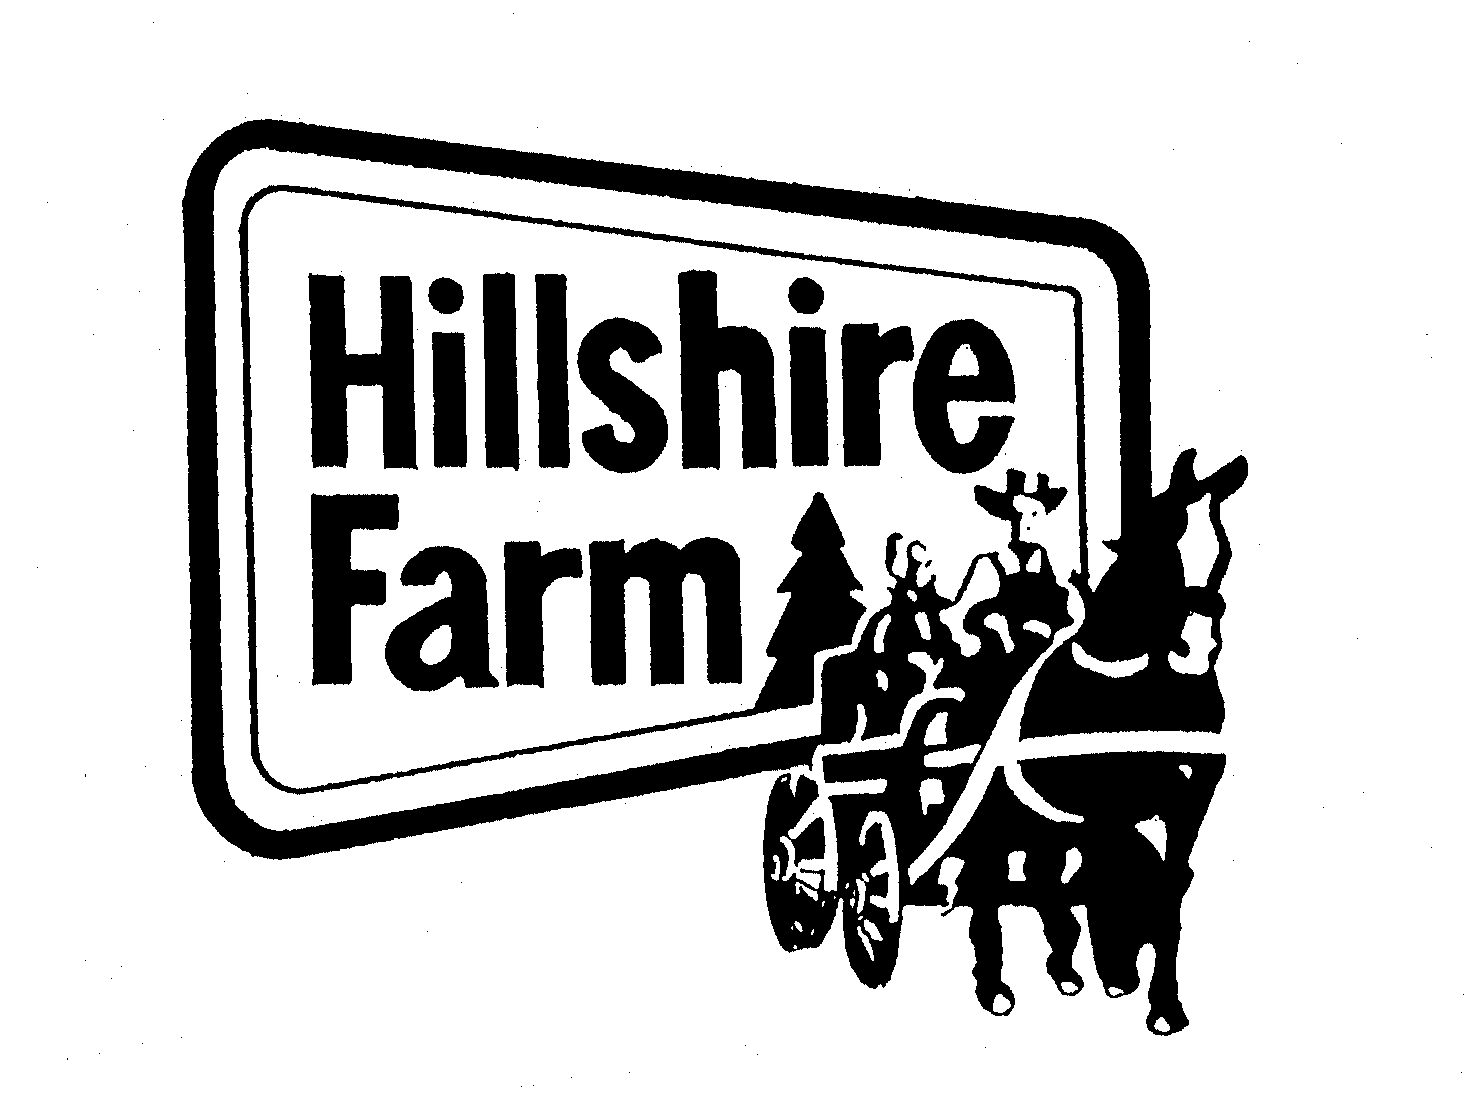  HILLSHIRE FARM